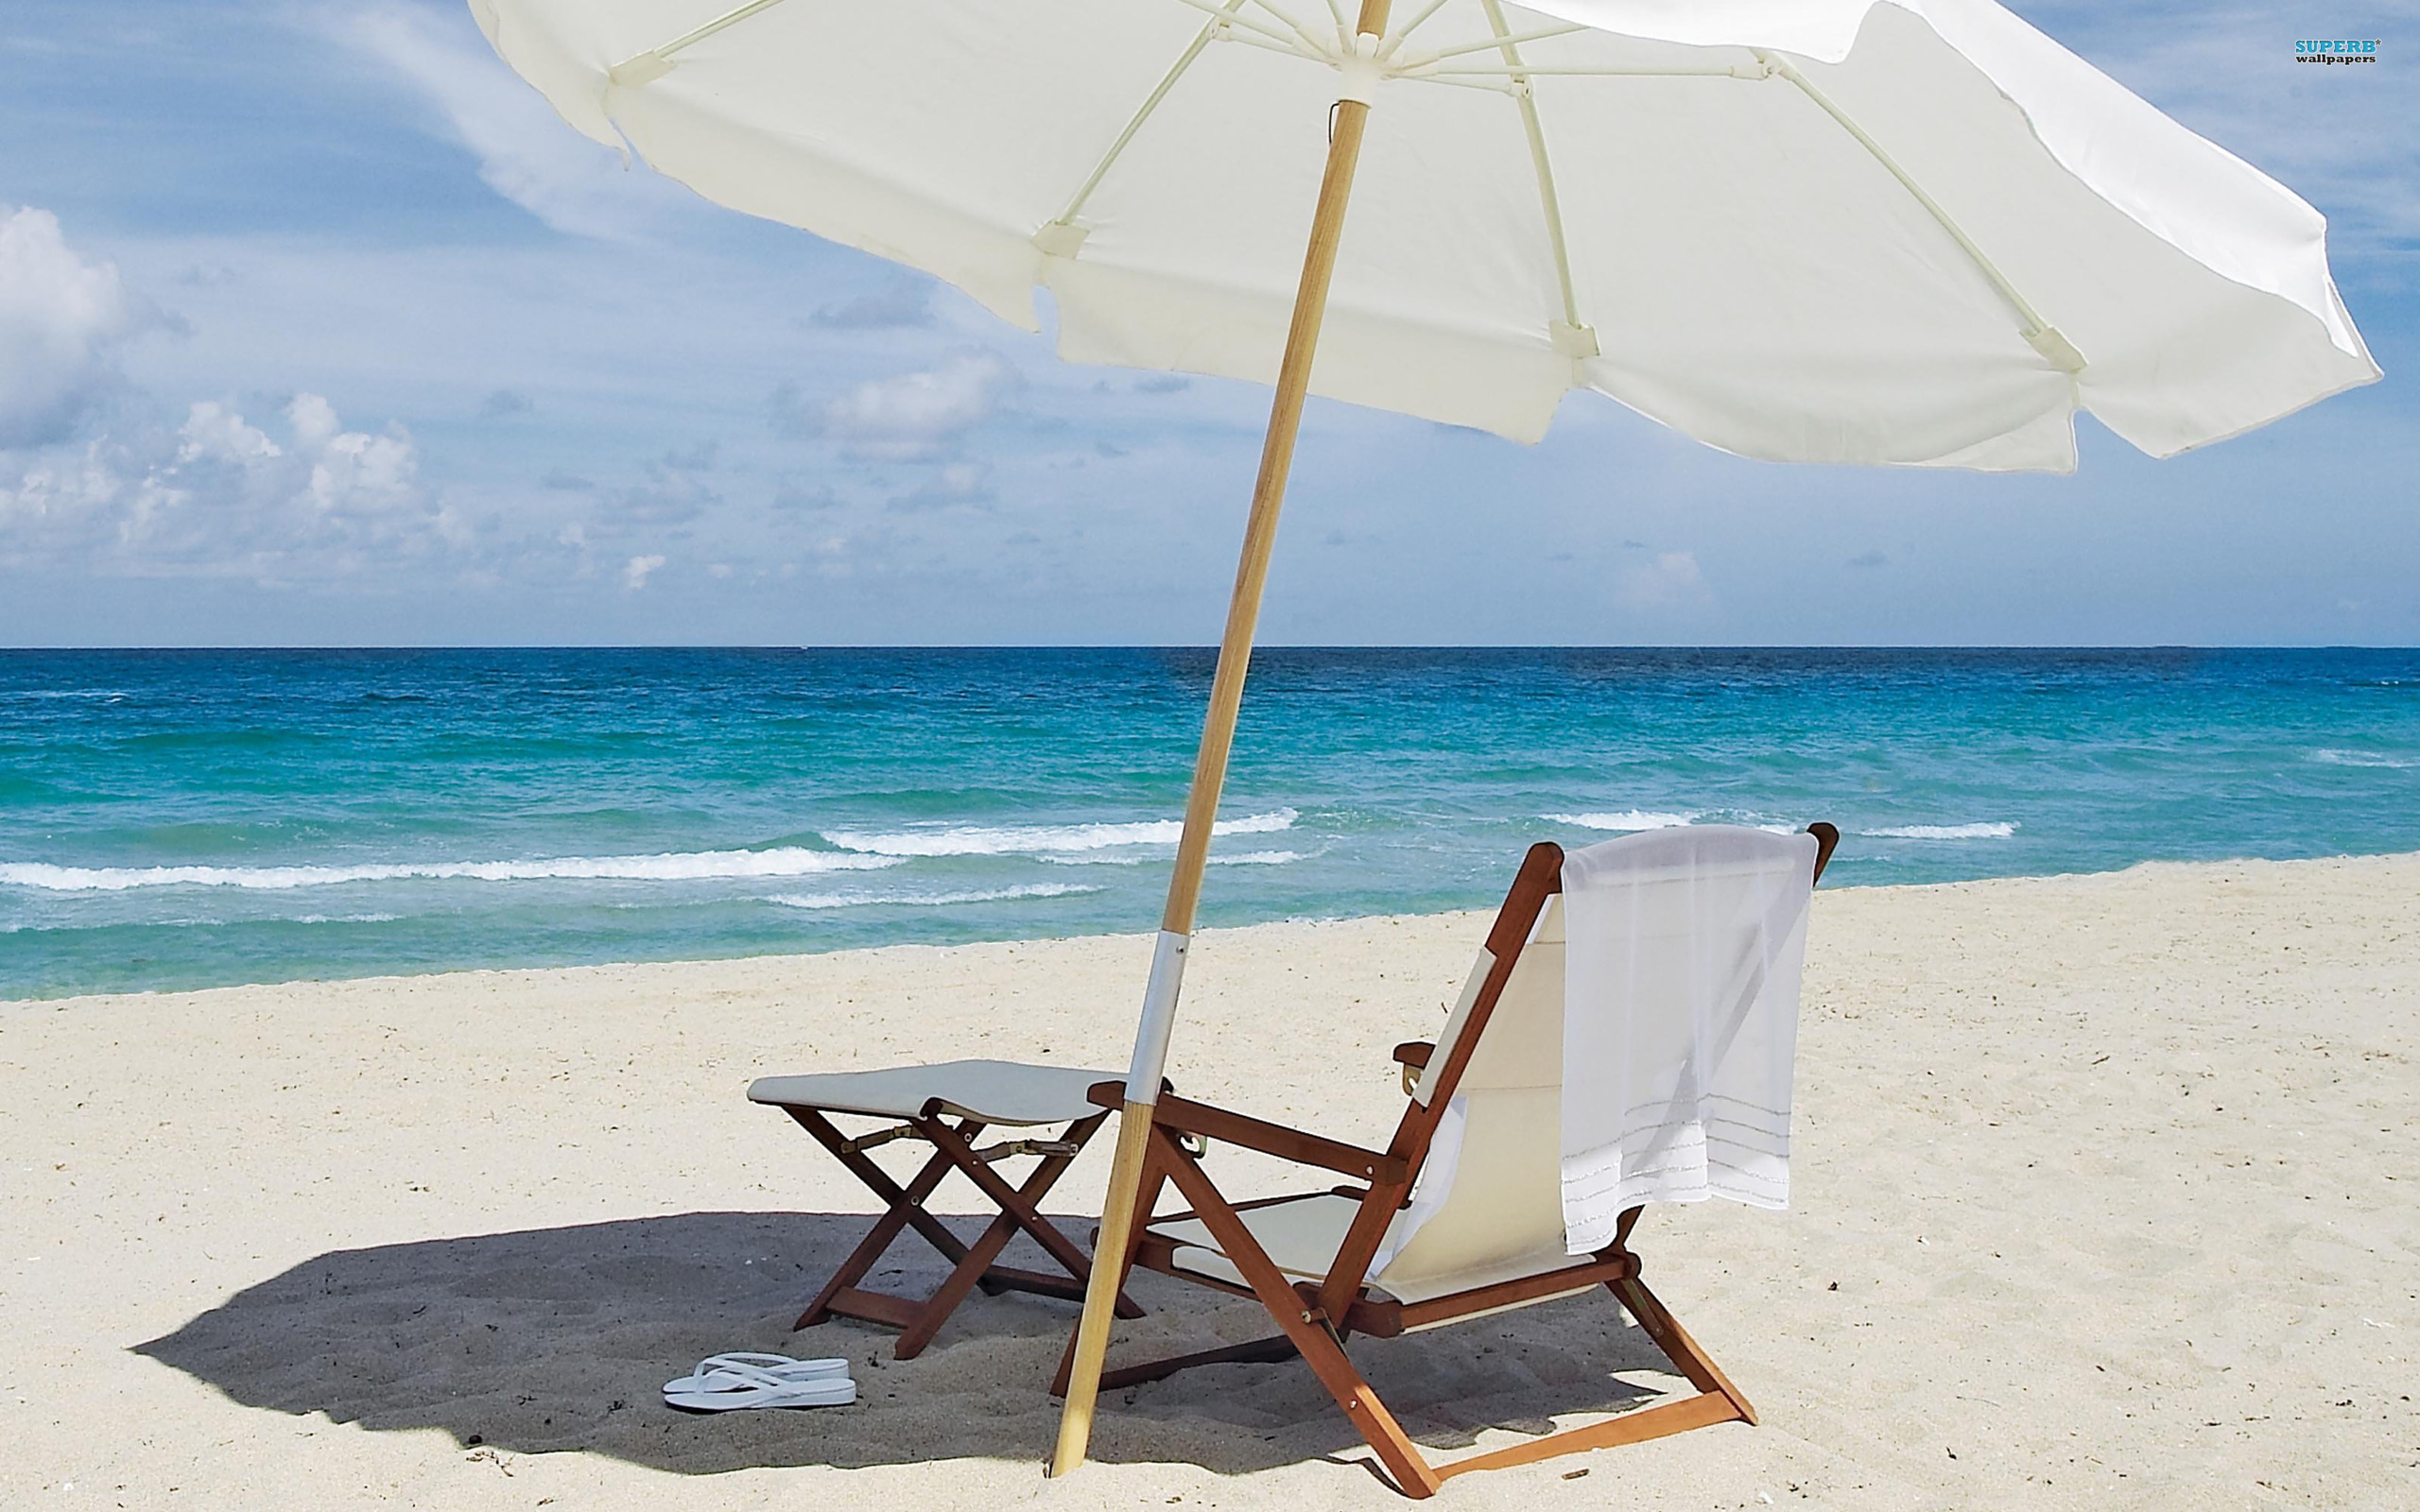 sunny beach wallpaper,umbrella,furniture,beach,turquoise,outdoor furniture